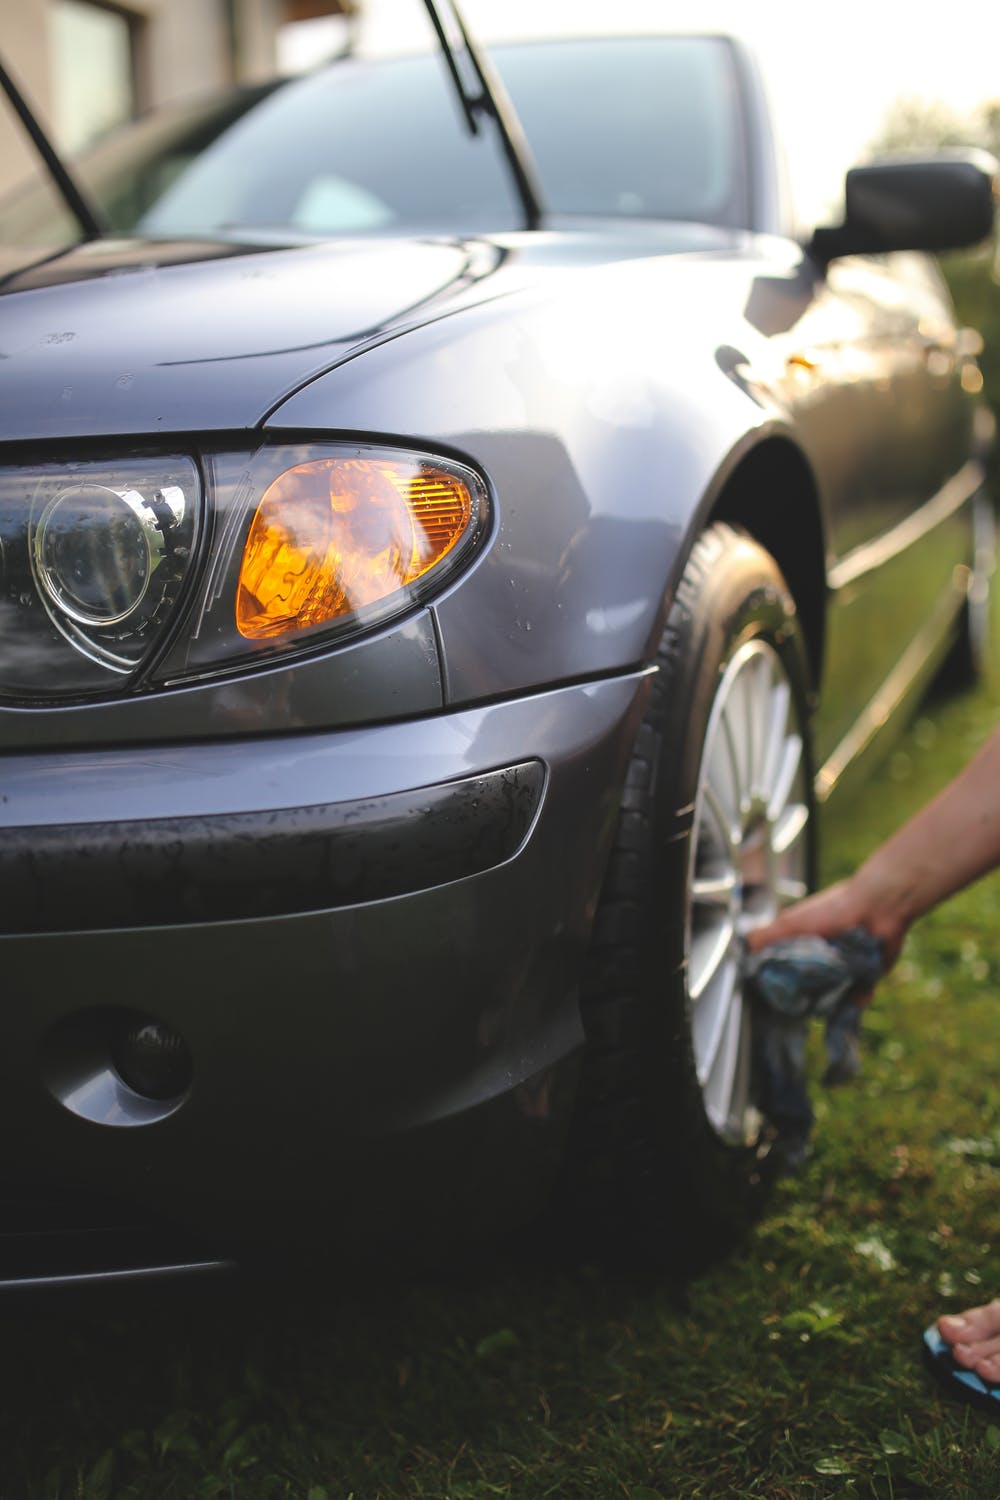 Basic Car Maintenance Tasks You Can Master at Home